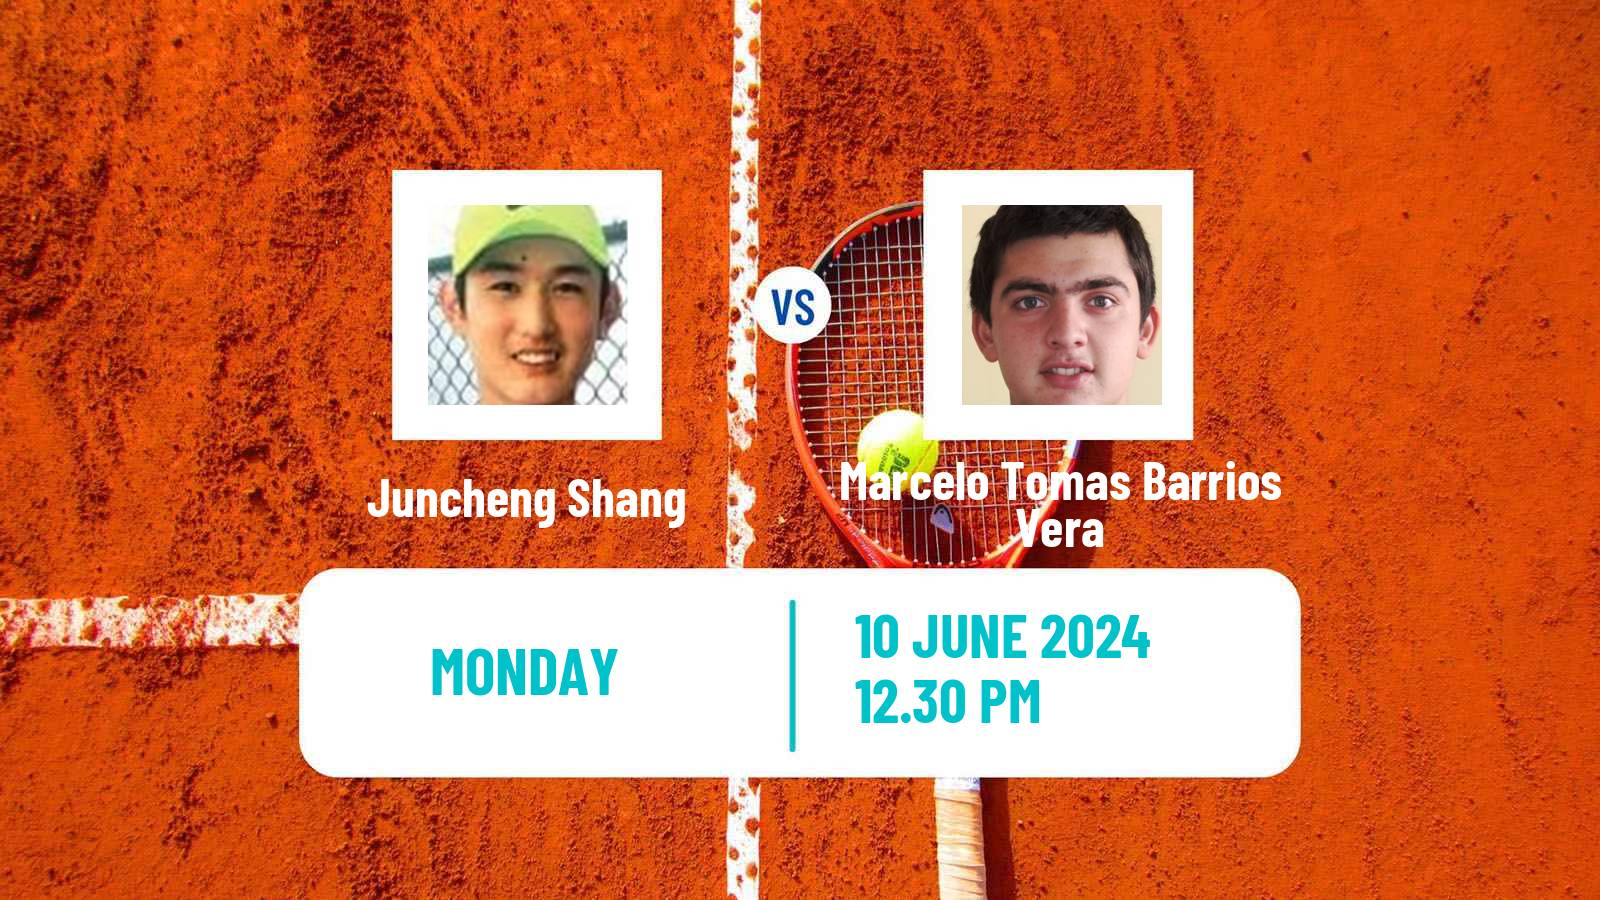 Tennis Nottingham Challenger Men Juncheng Shang - Marcelo Tomas Barrios Vera